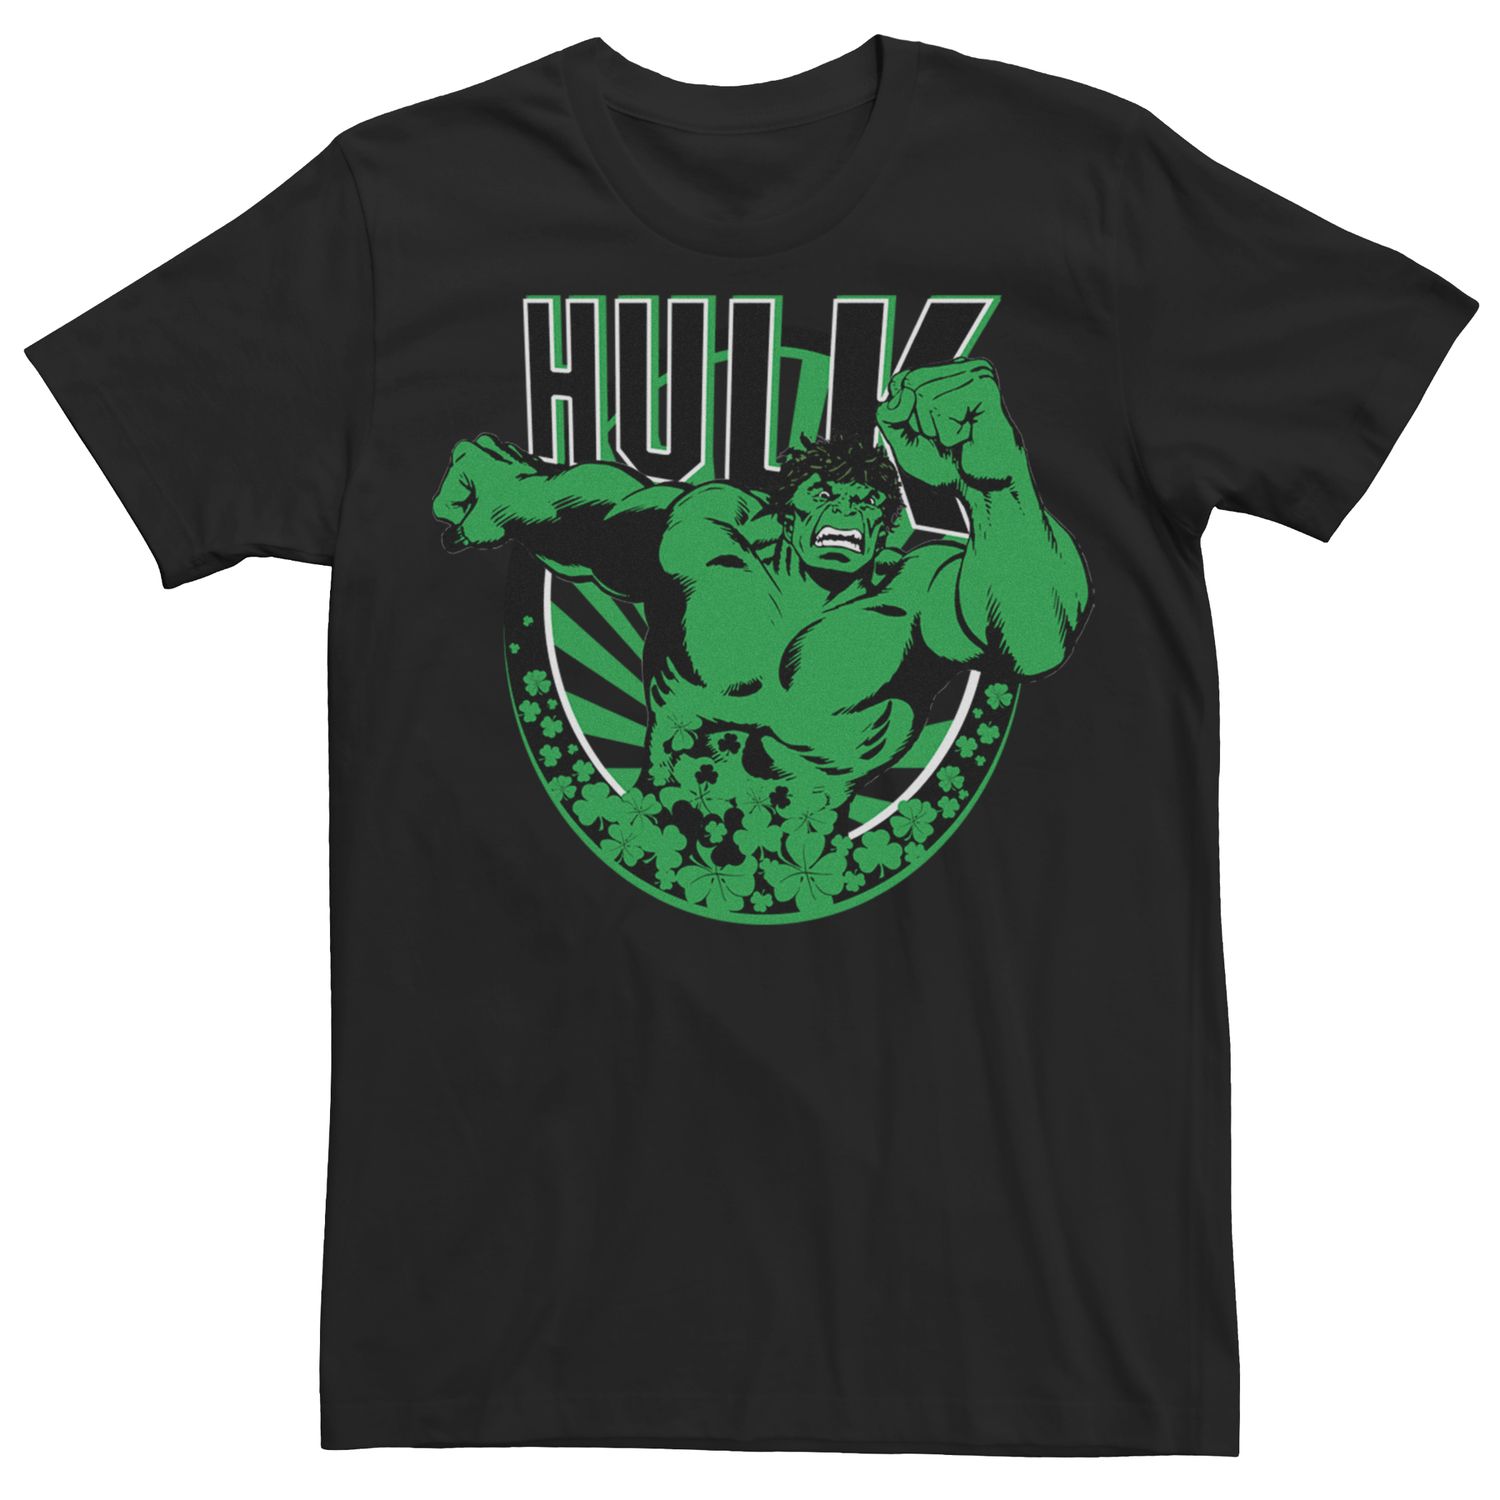 Мужская футболка Marvel Hulk Luck ко Дню Святого Патрика Licensed Character мужская футболка с надписью hulk lucky ко дню святого патрика marvel